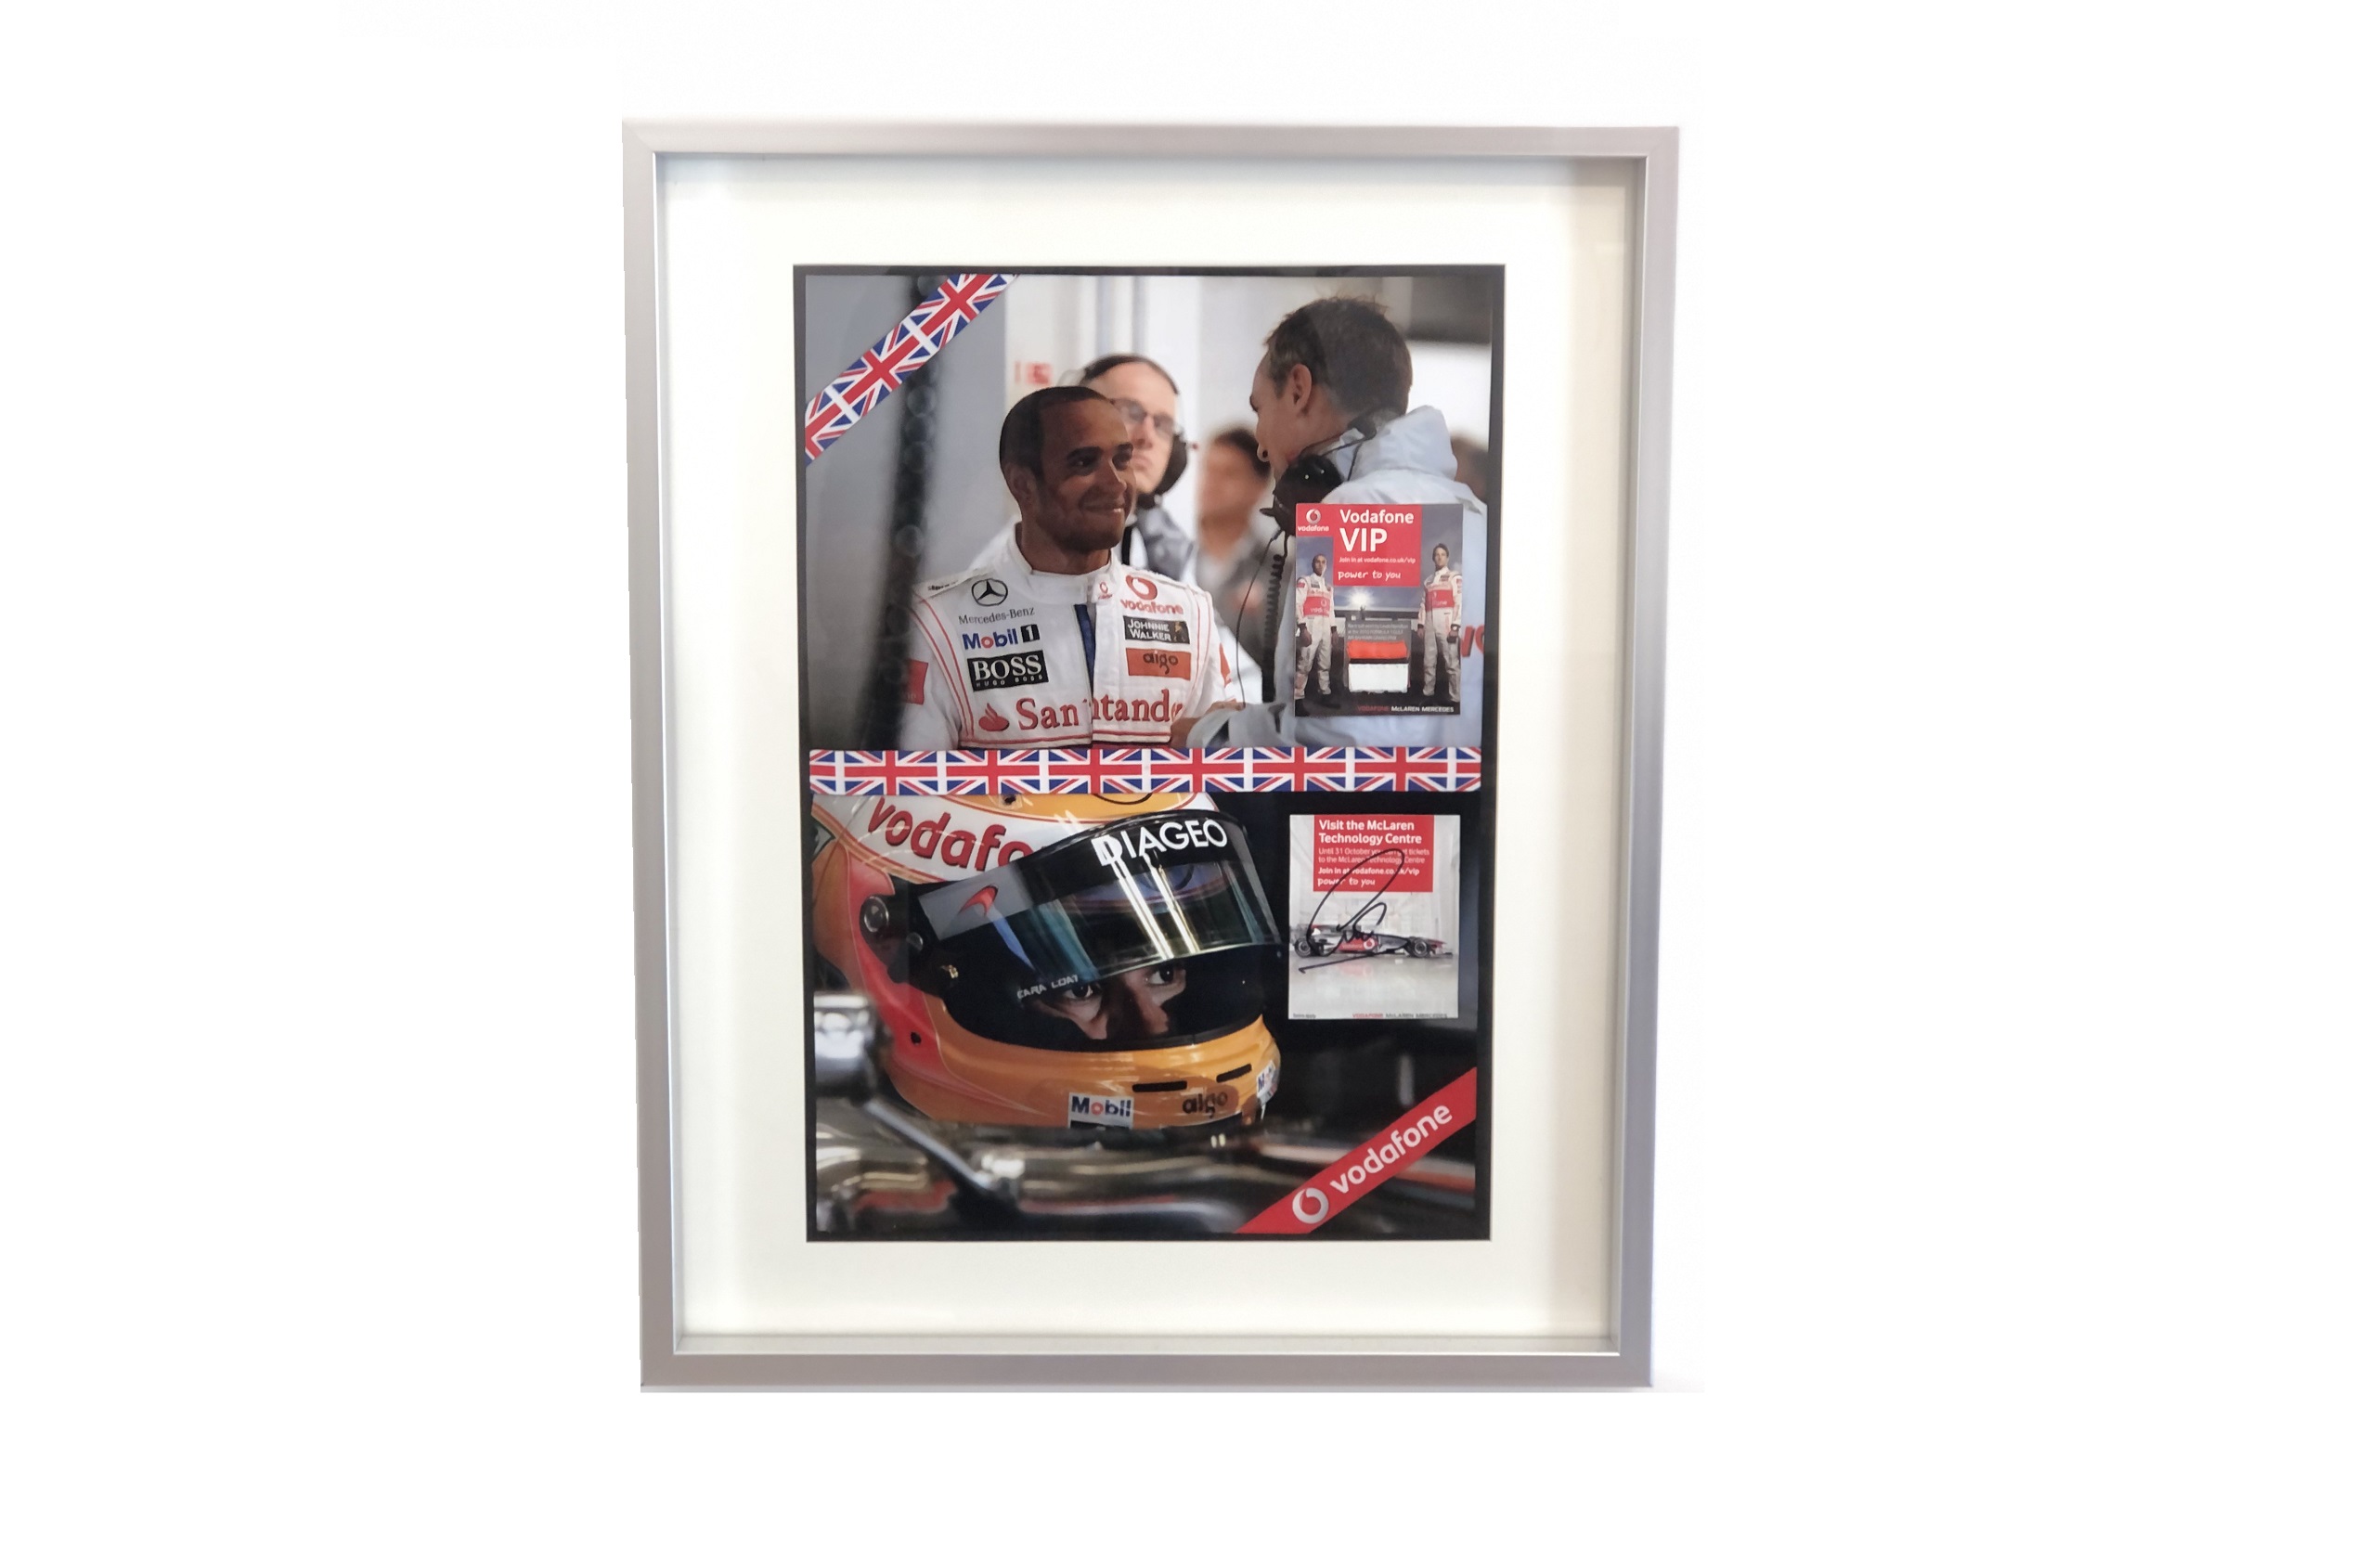 Lewis Hamilton's Signed and Framed Shirt - CharityStars